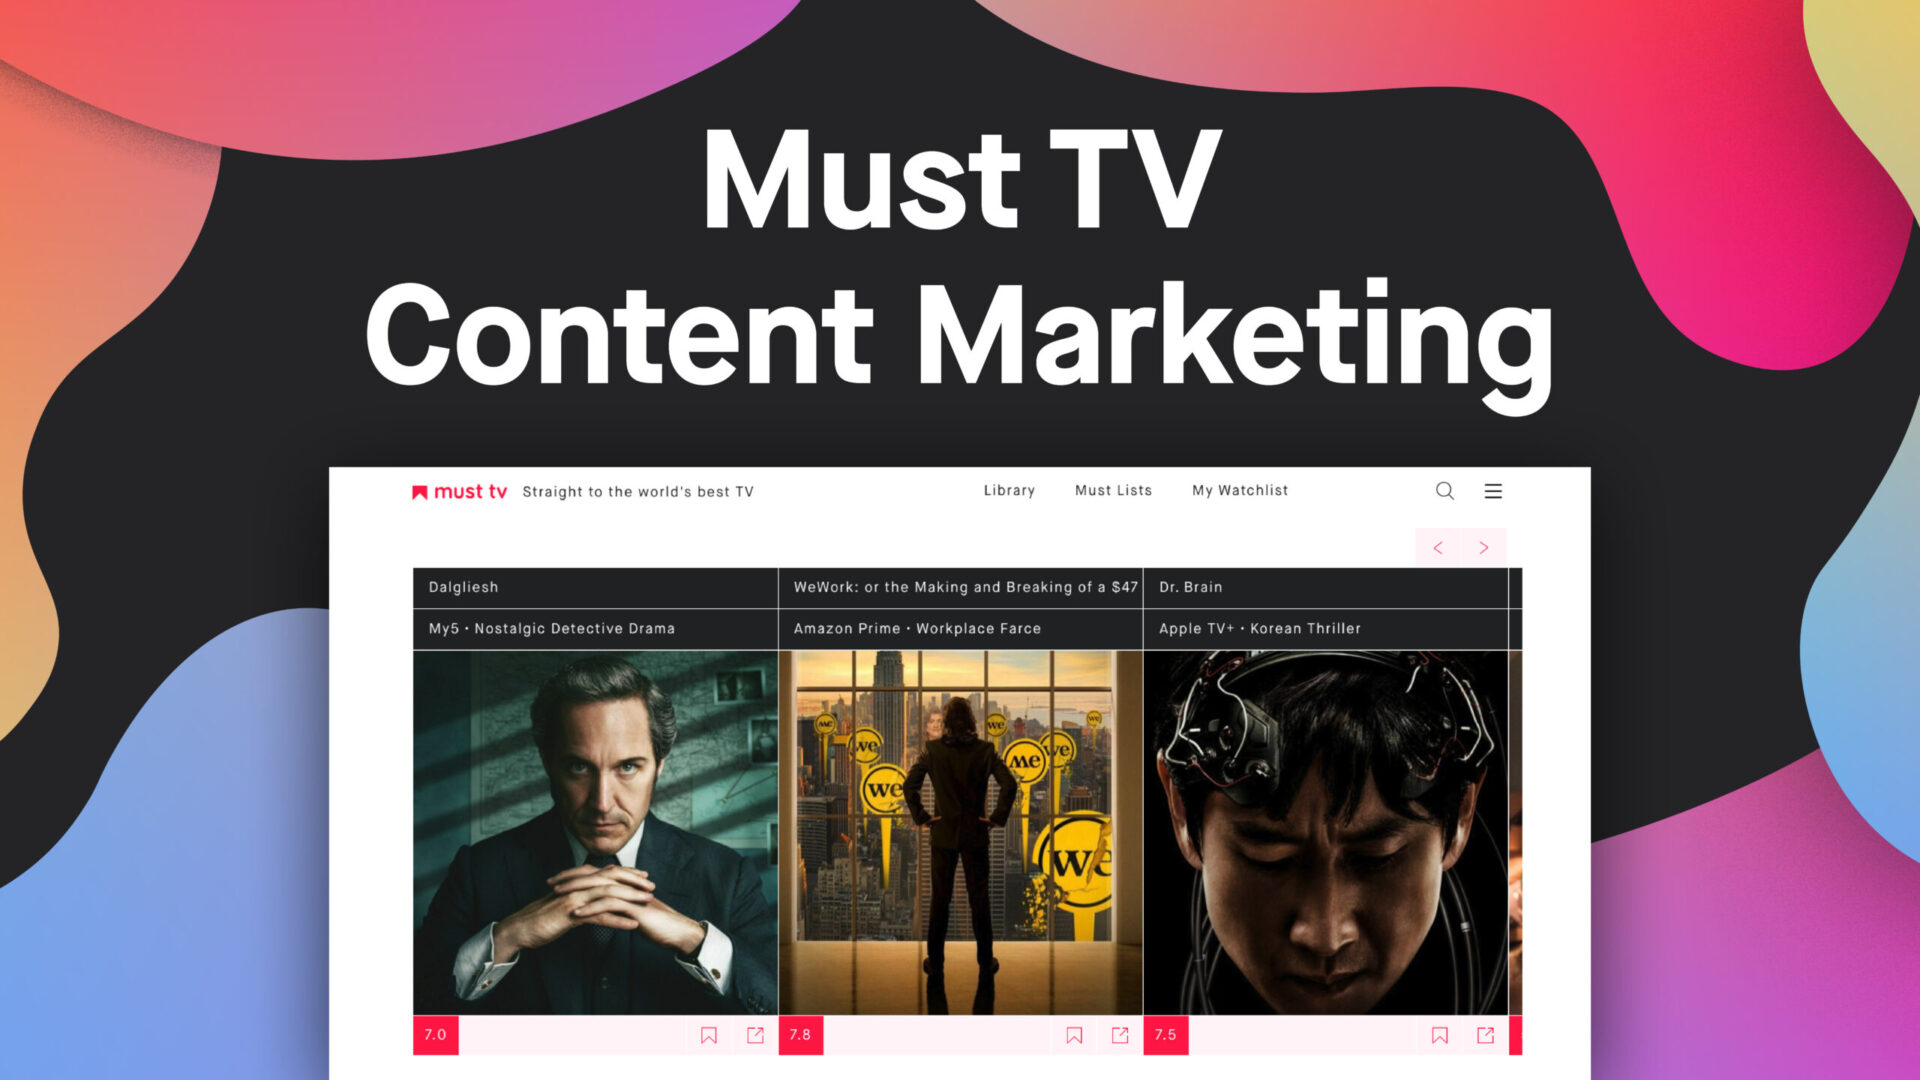 Must TV Content Marketing Grid